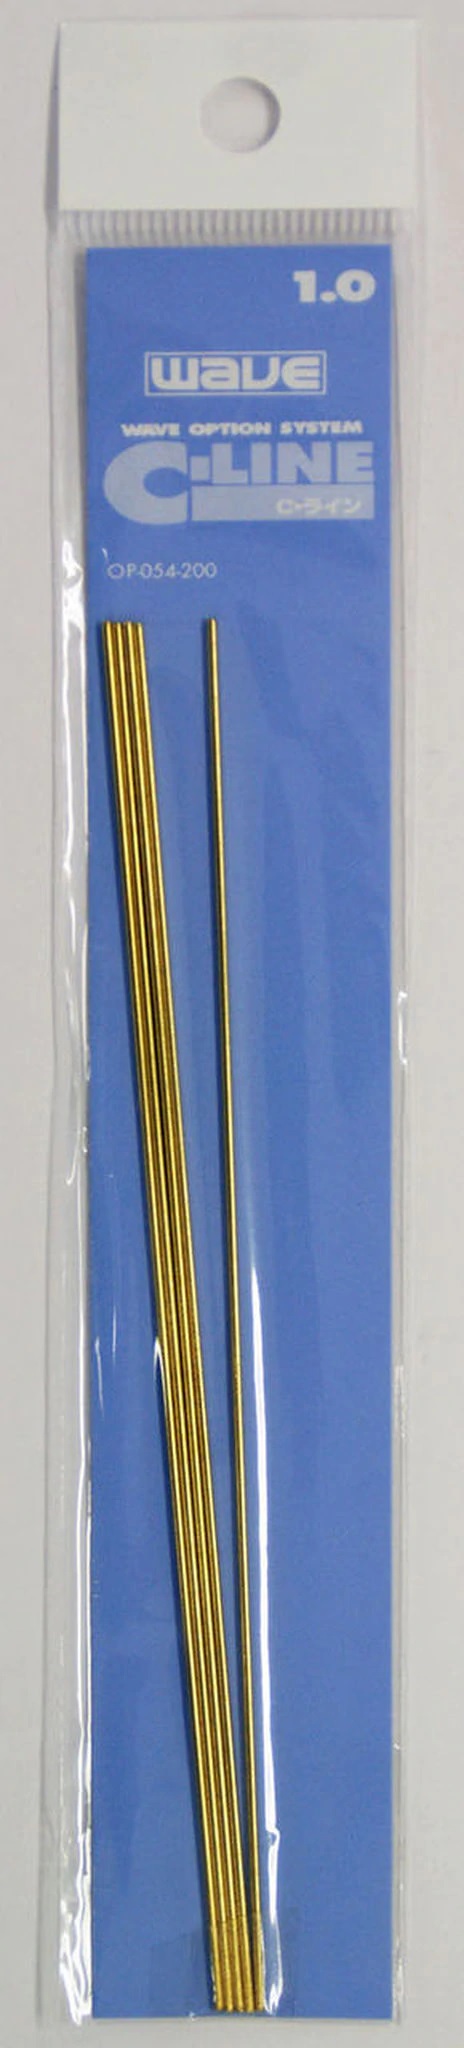 Wave C LINE (1.0mm) - Brass Wire 1.0 mm (3 pack) 